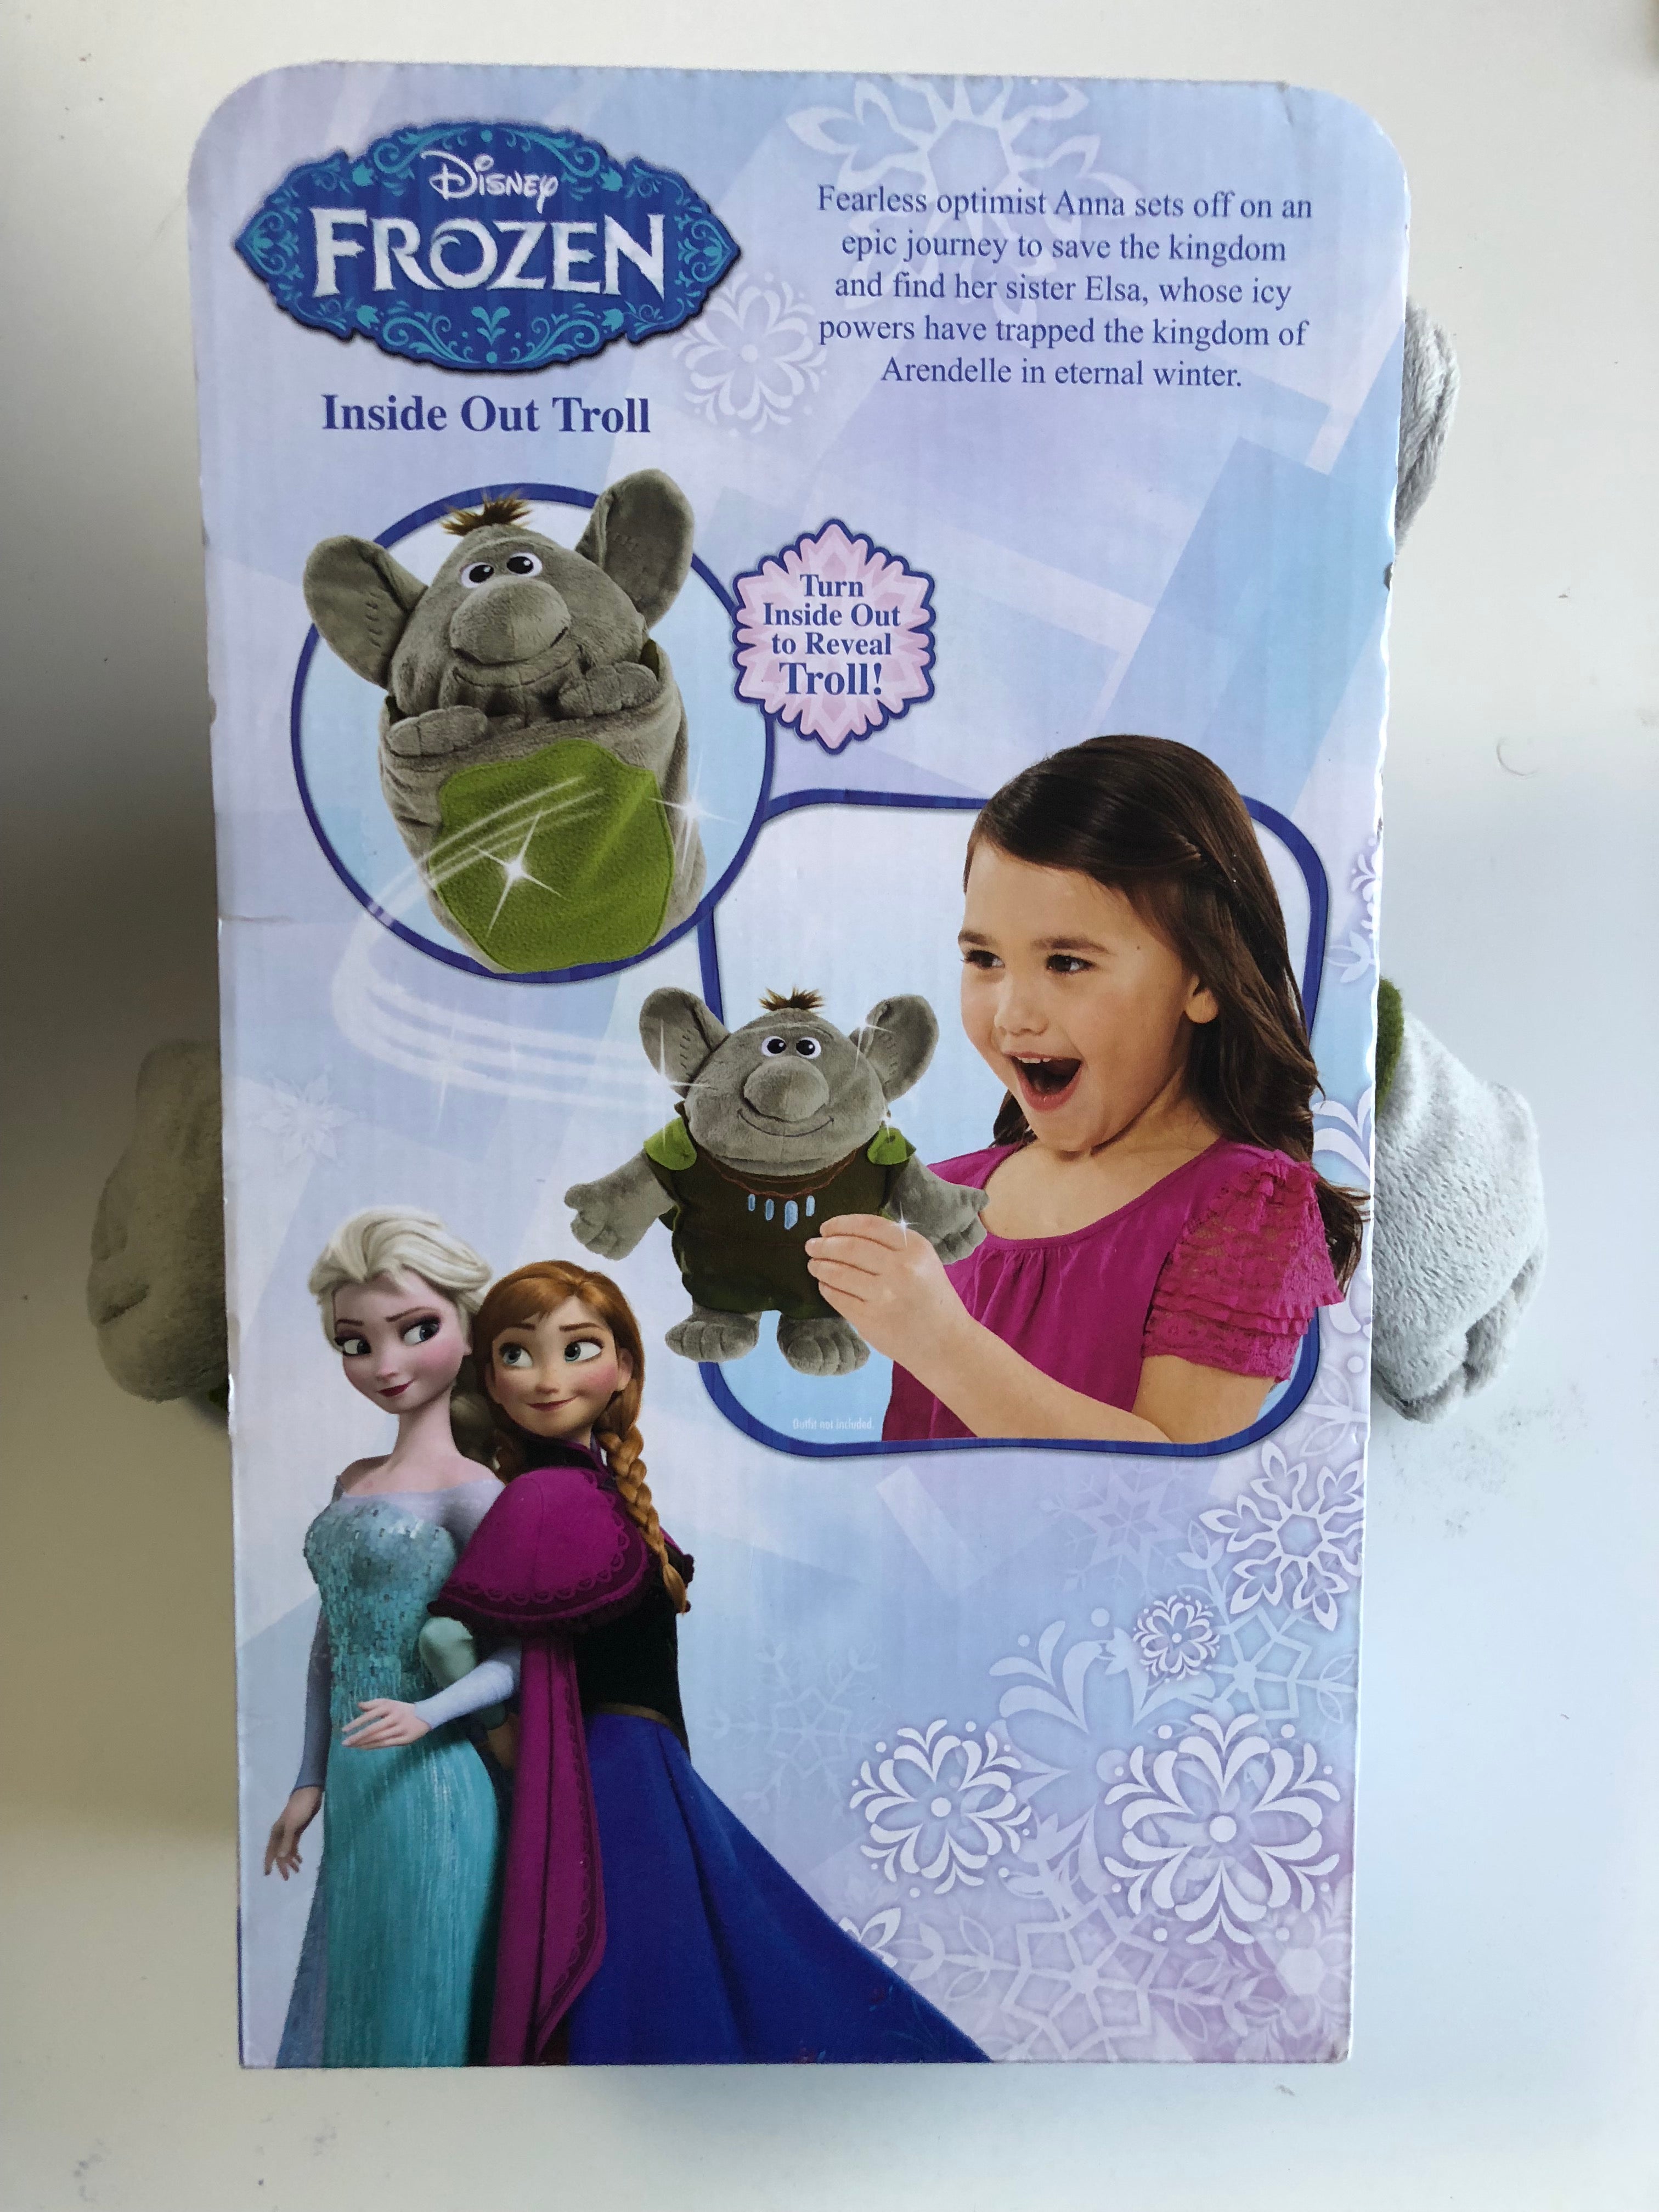 Disney Frozen Turn Inside Out to Reveal Troll Plush Toy Olaf Elsa Anna Arendelle Kingdom